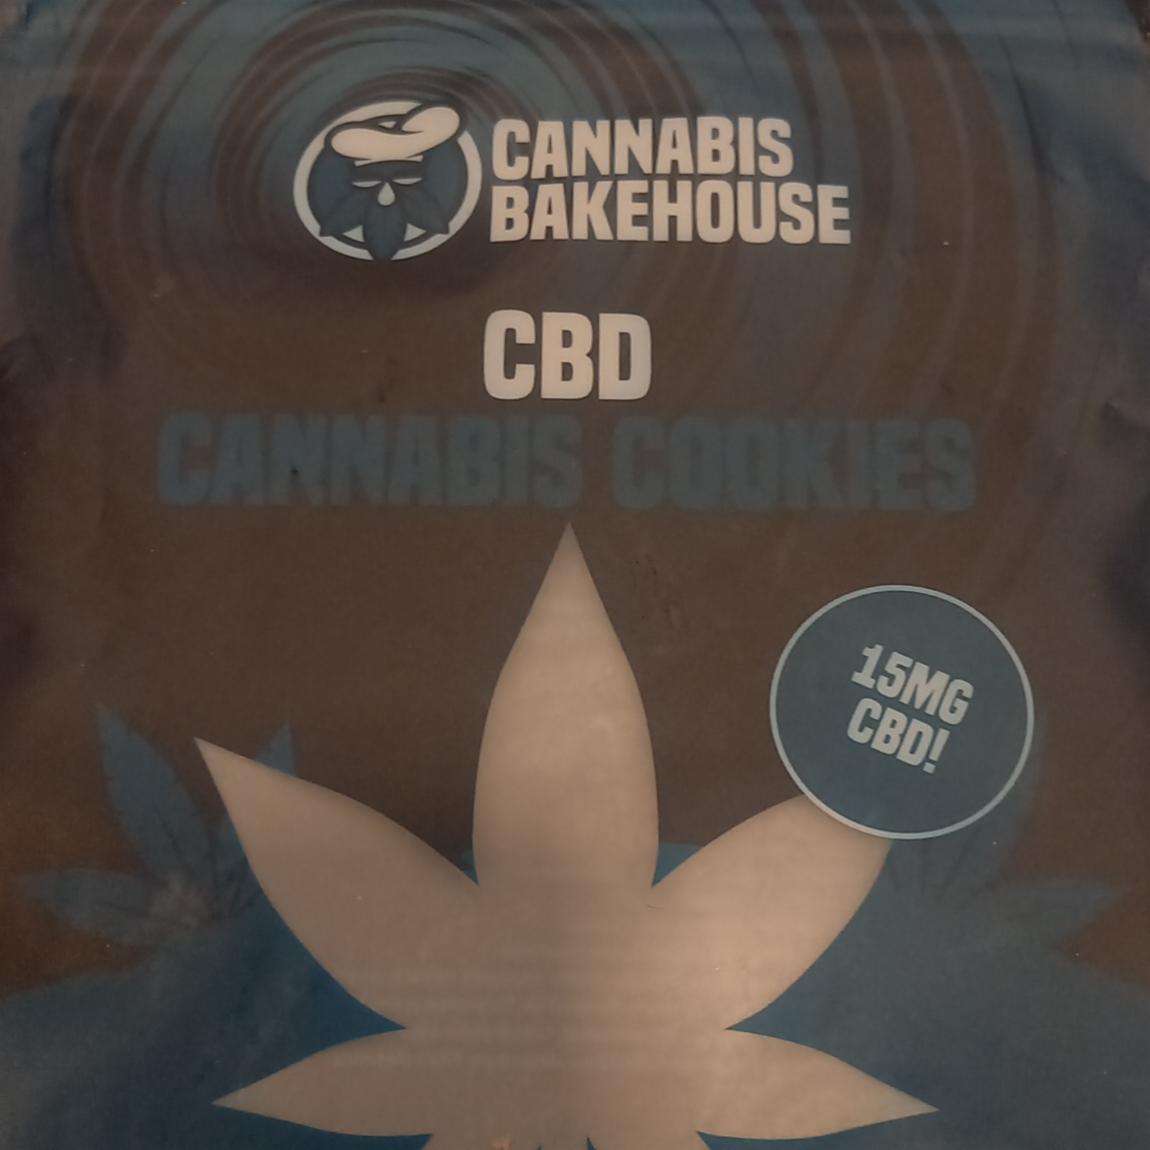 Fotografie - CBD Cannabis Cookies Cannabbis Bakehouse